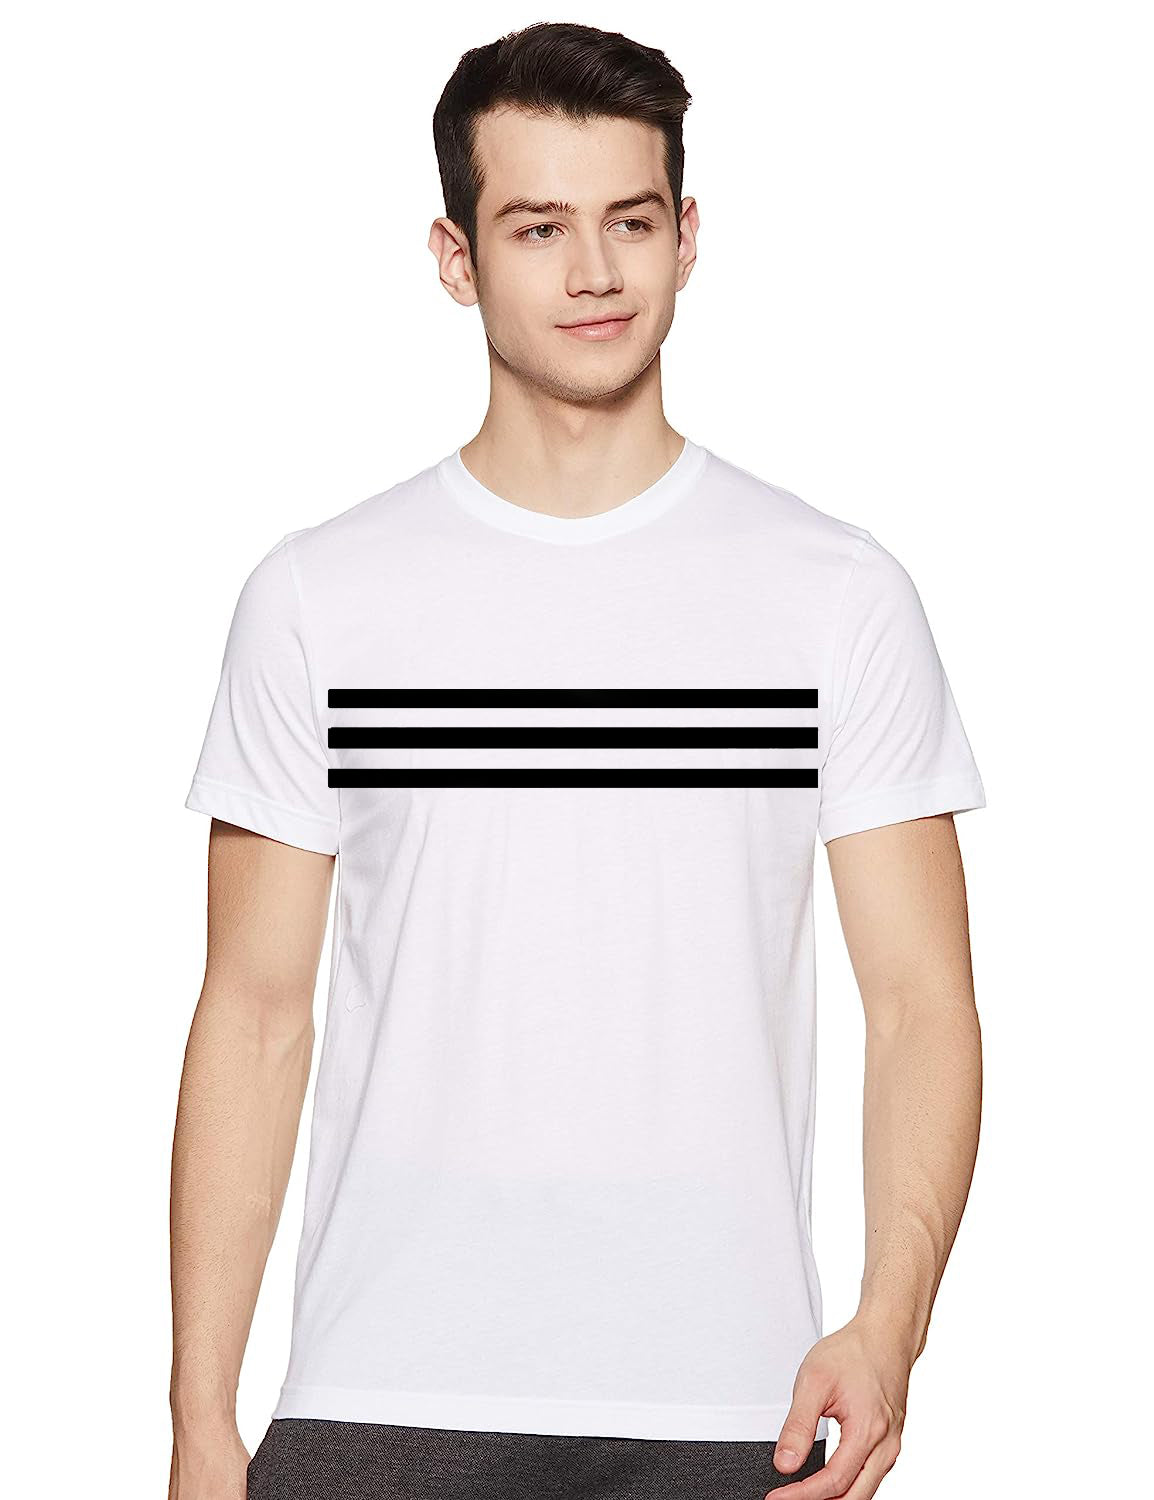 TheStyleO Cotton Half Sleeve Line Shades Tees| T-Shirt